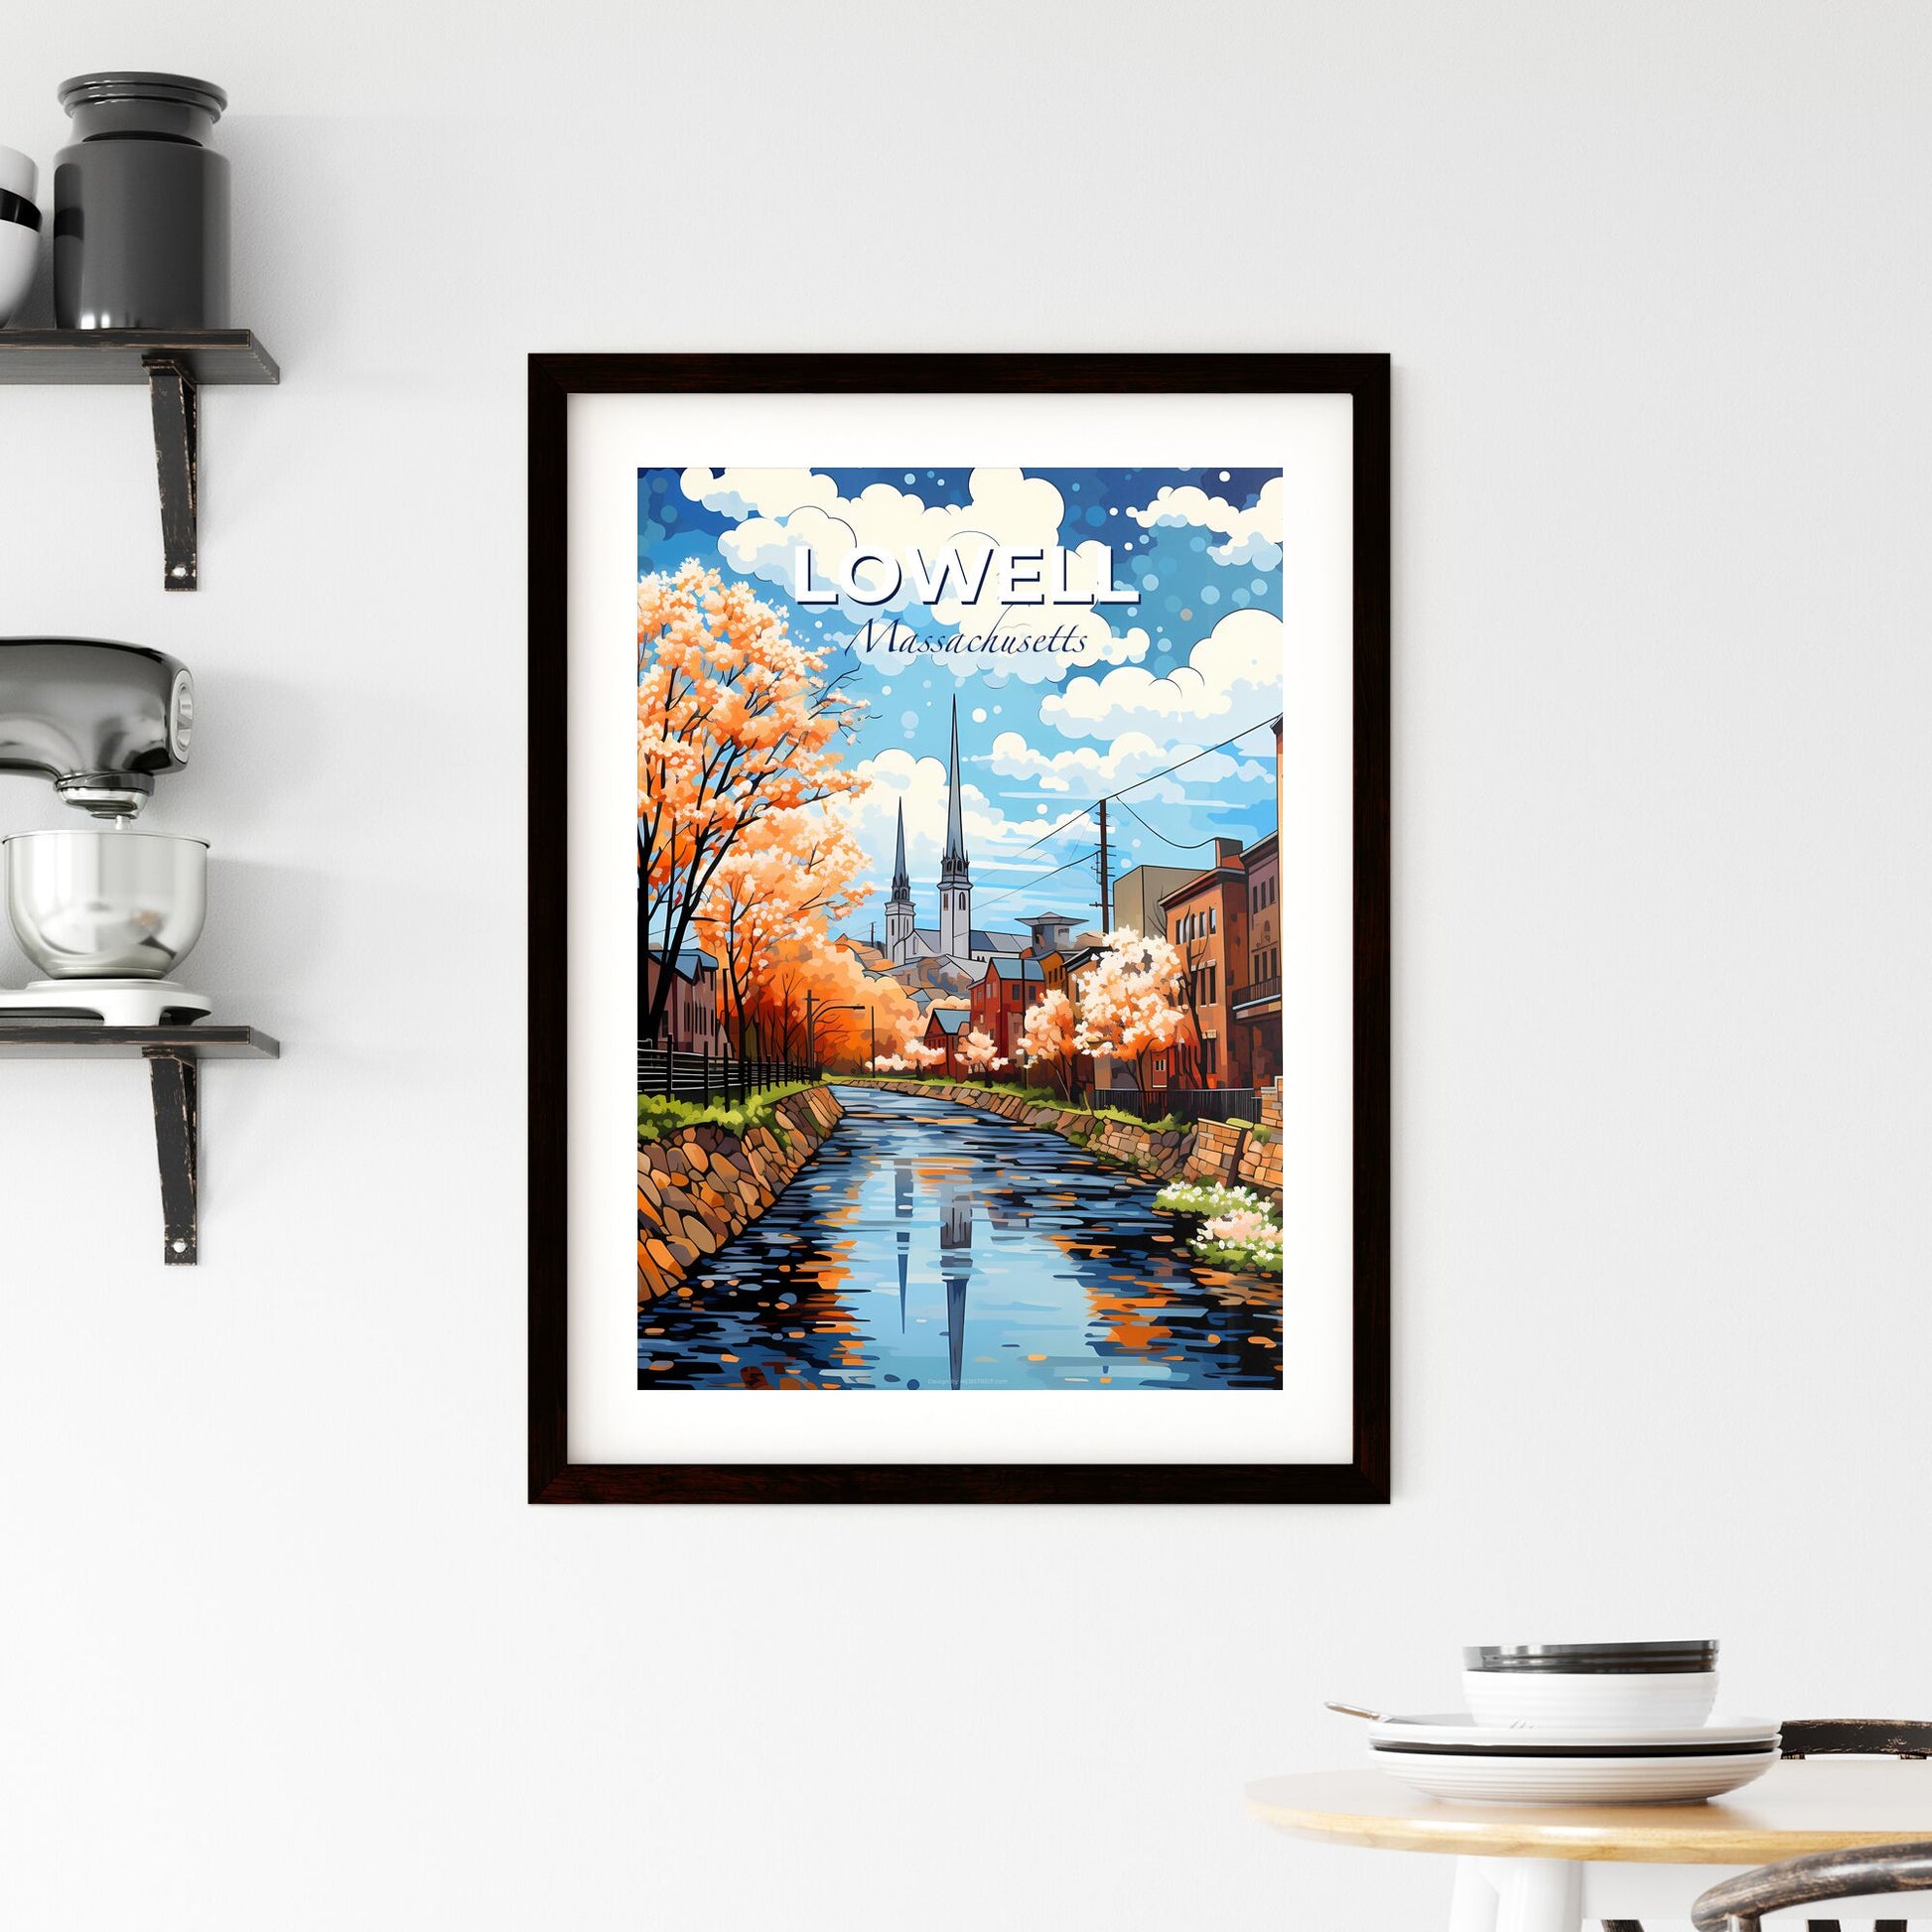 Lowell, Massachusetts, A Poster of a river running through a city Default Title